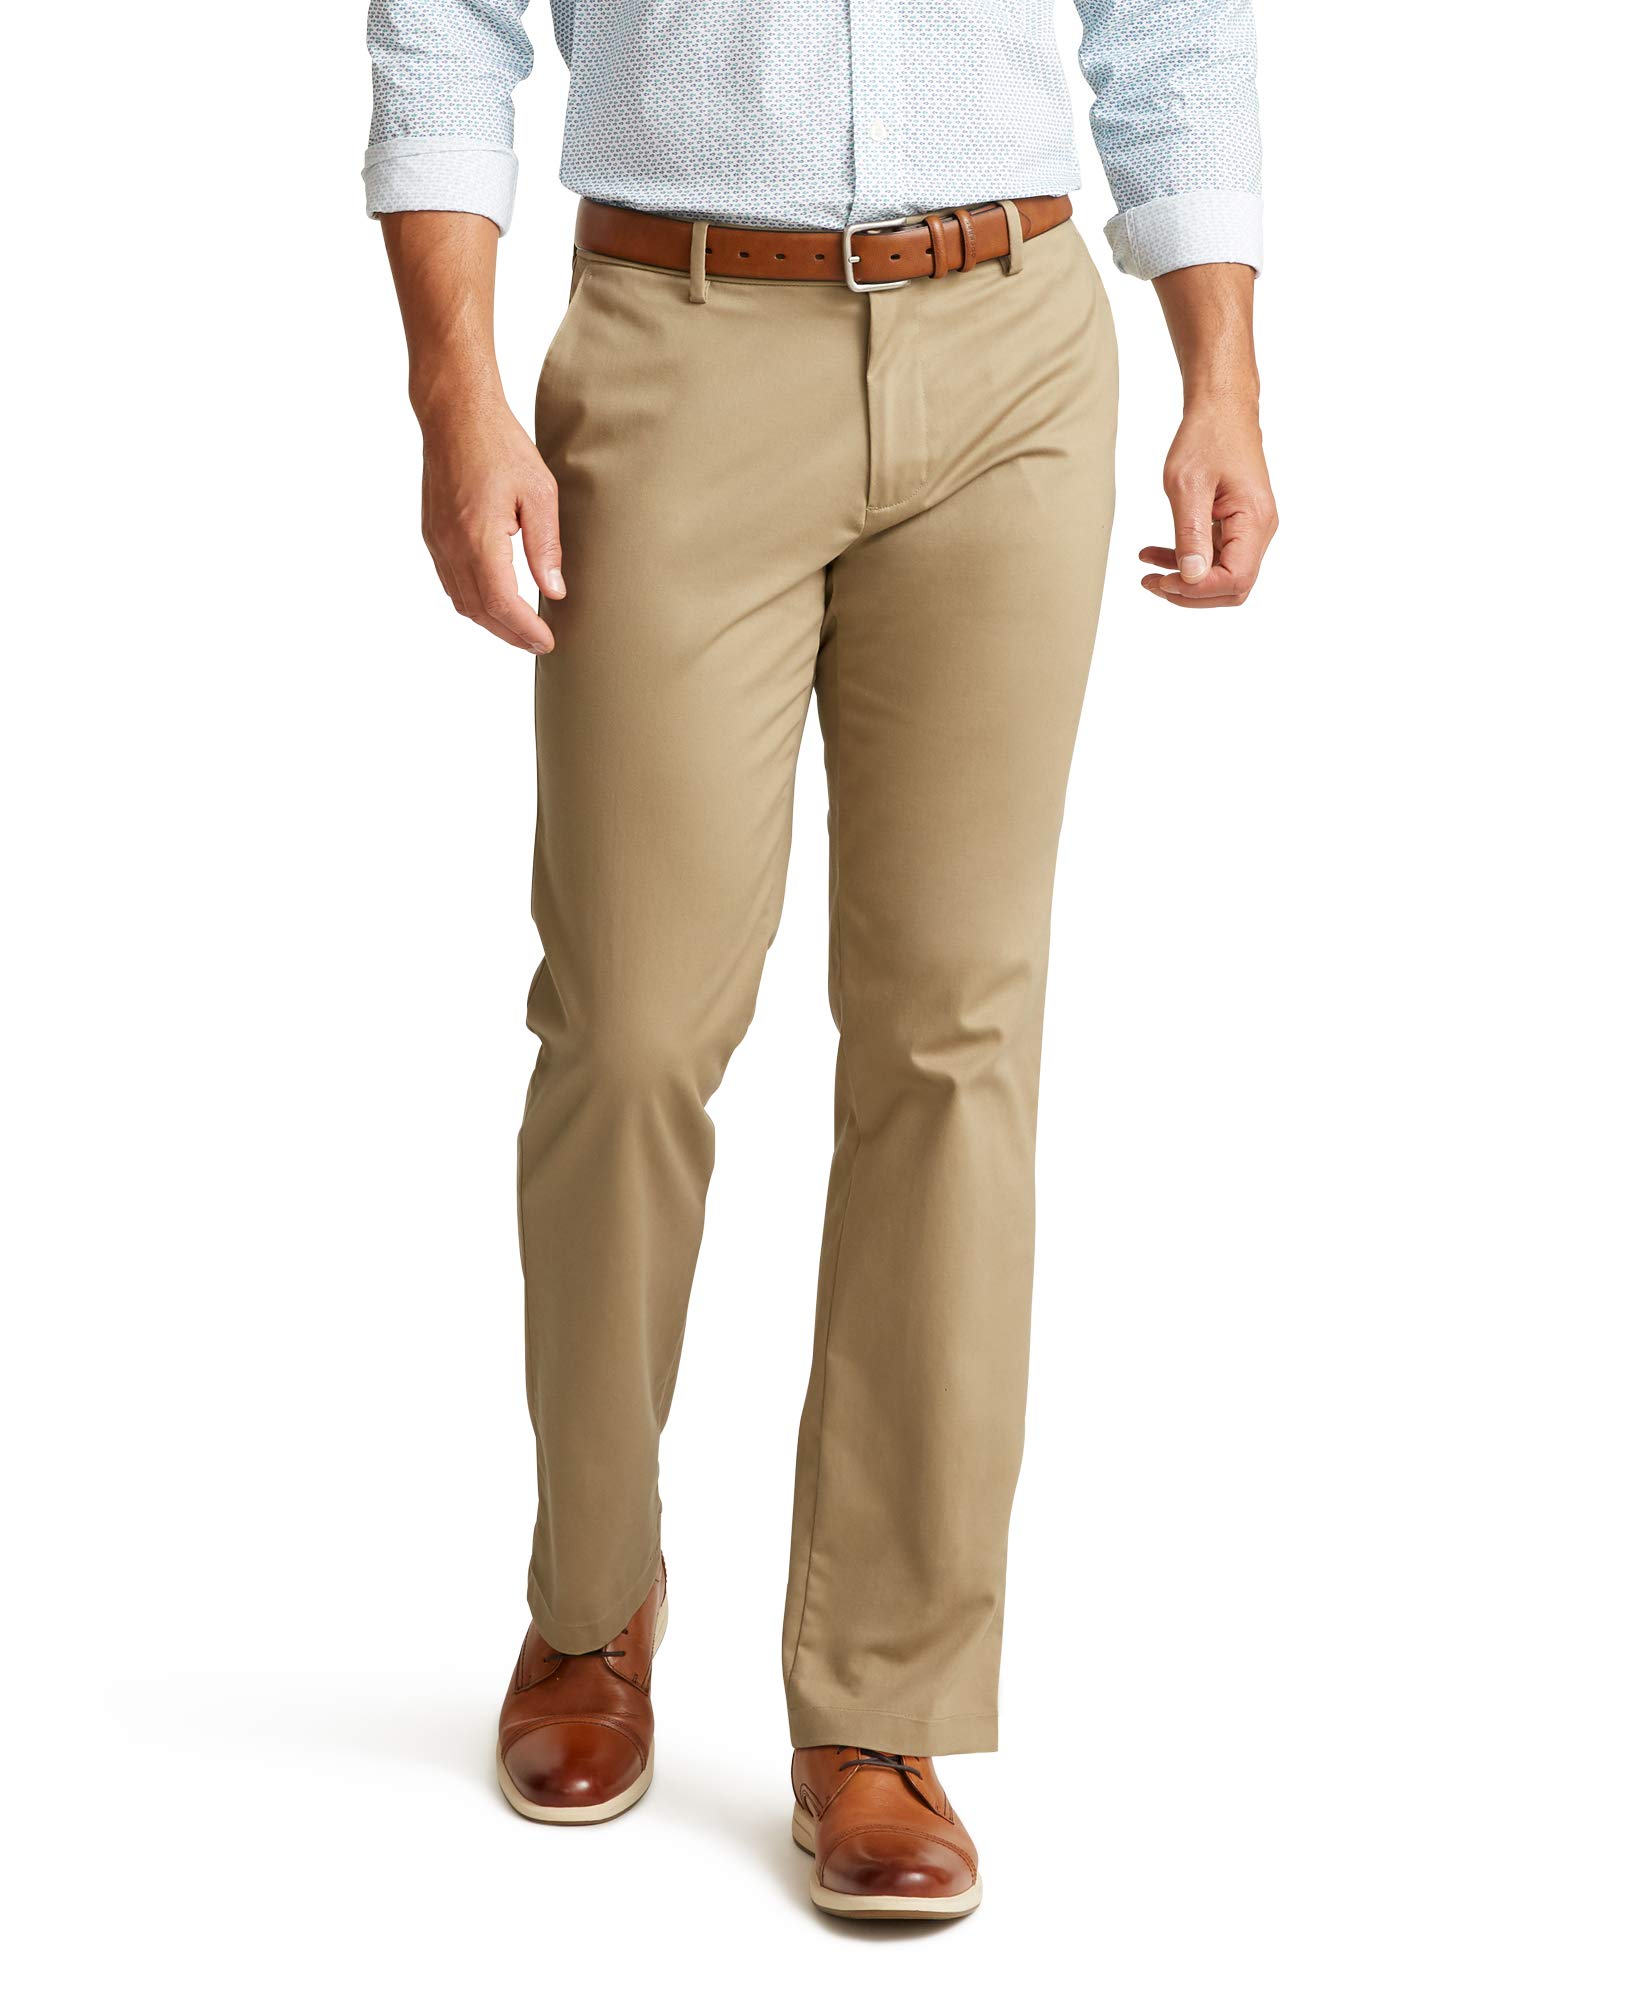 Dockers Men's Straight Fit Signature Lux Cotton Stretch Khaki Pants (New British Khaki) $15 + Free Shipping w/ Prime or $35+